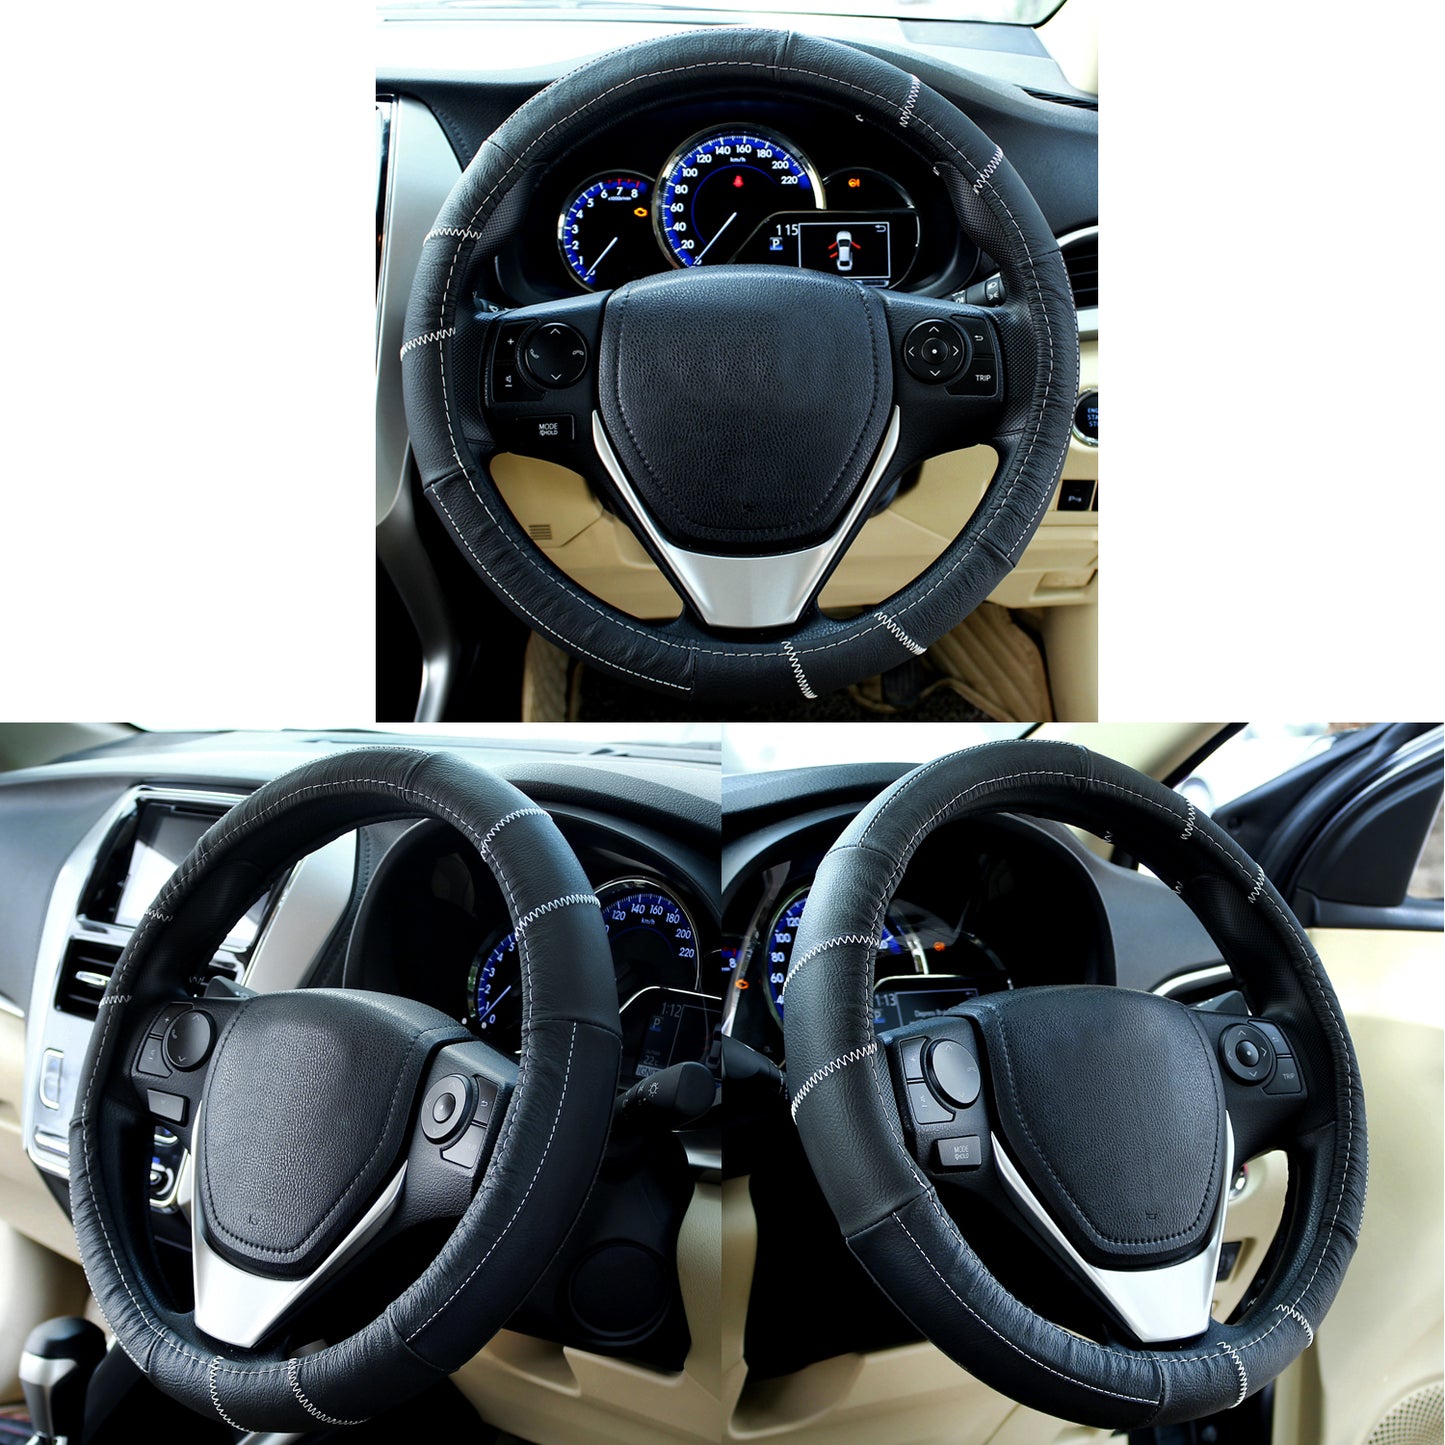 Oshotto SC-006 Leather Car Steering Cover (Black,Medium)